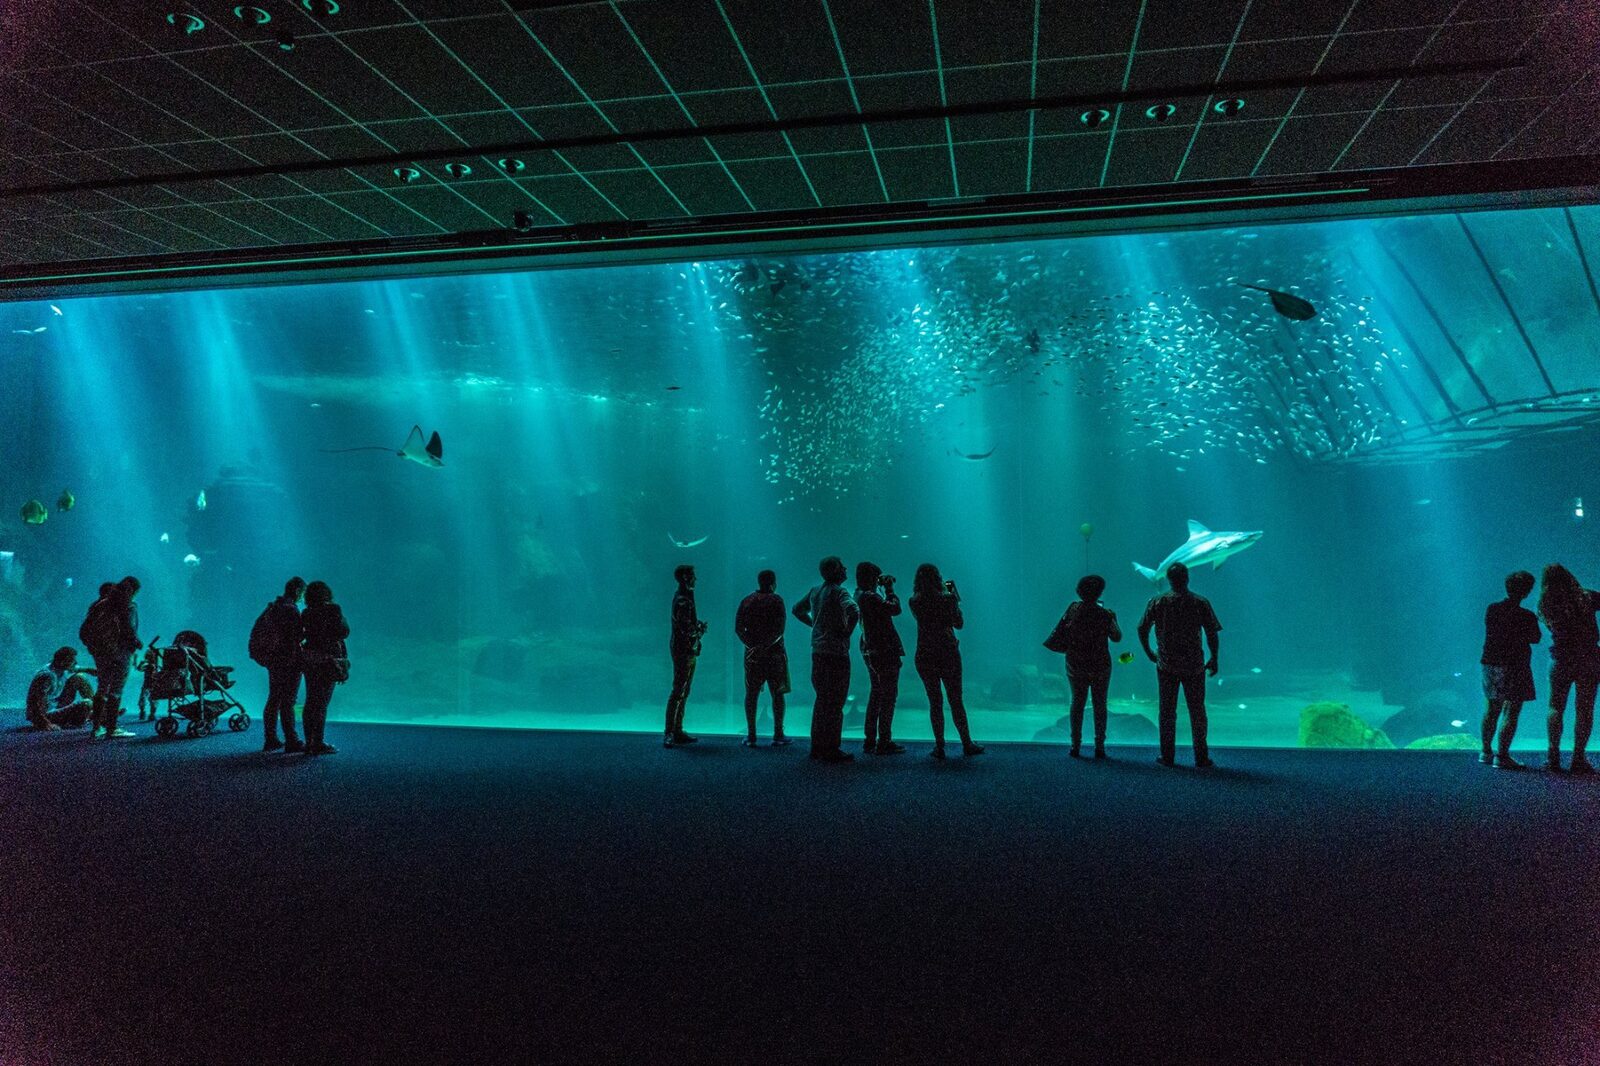 Large aquarium with sharks and marine mammals at the Nausicaá Aquarium.